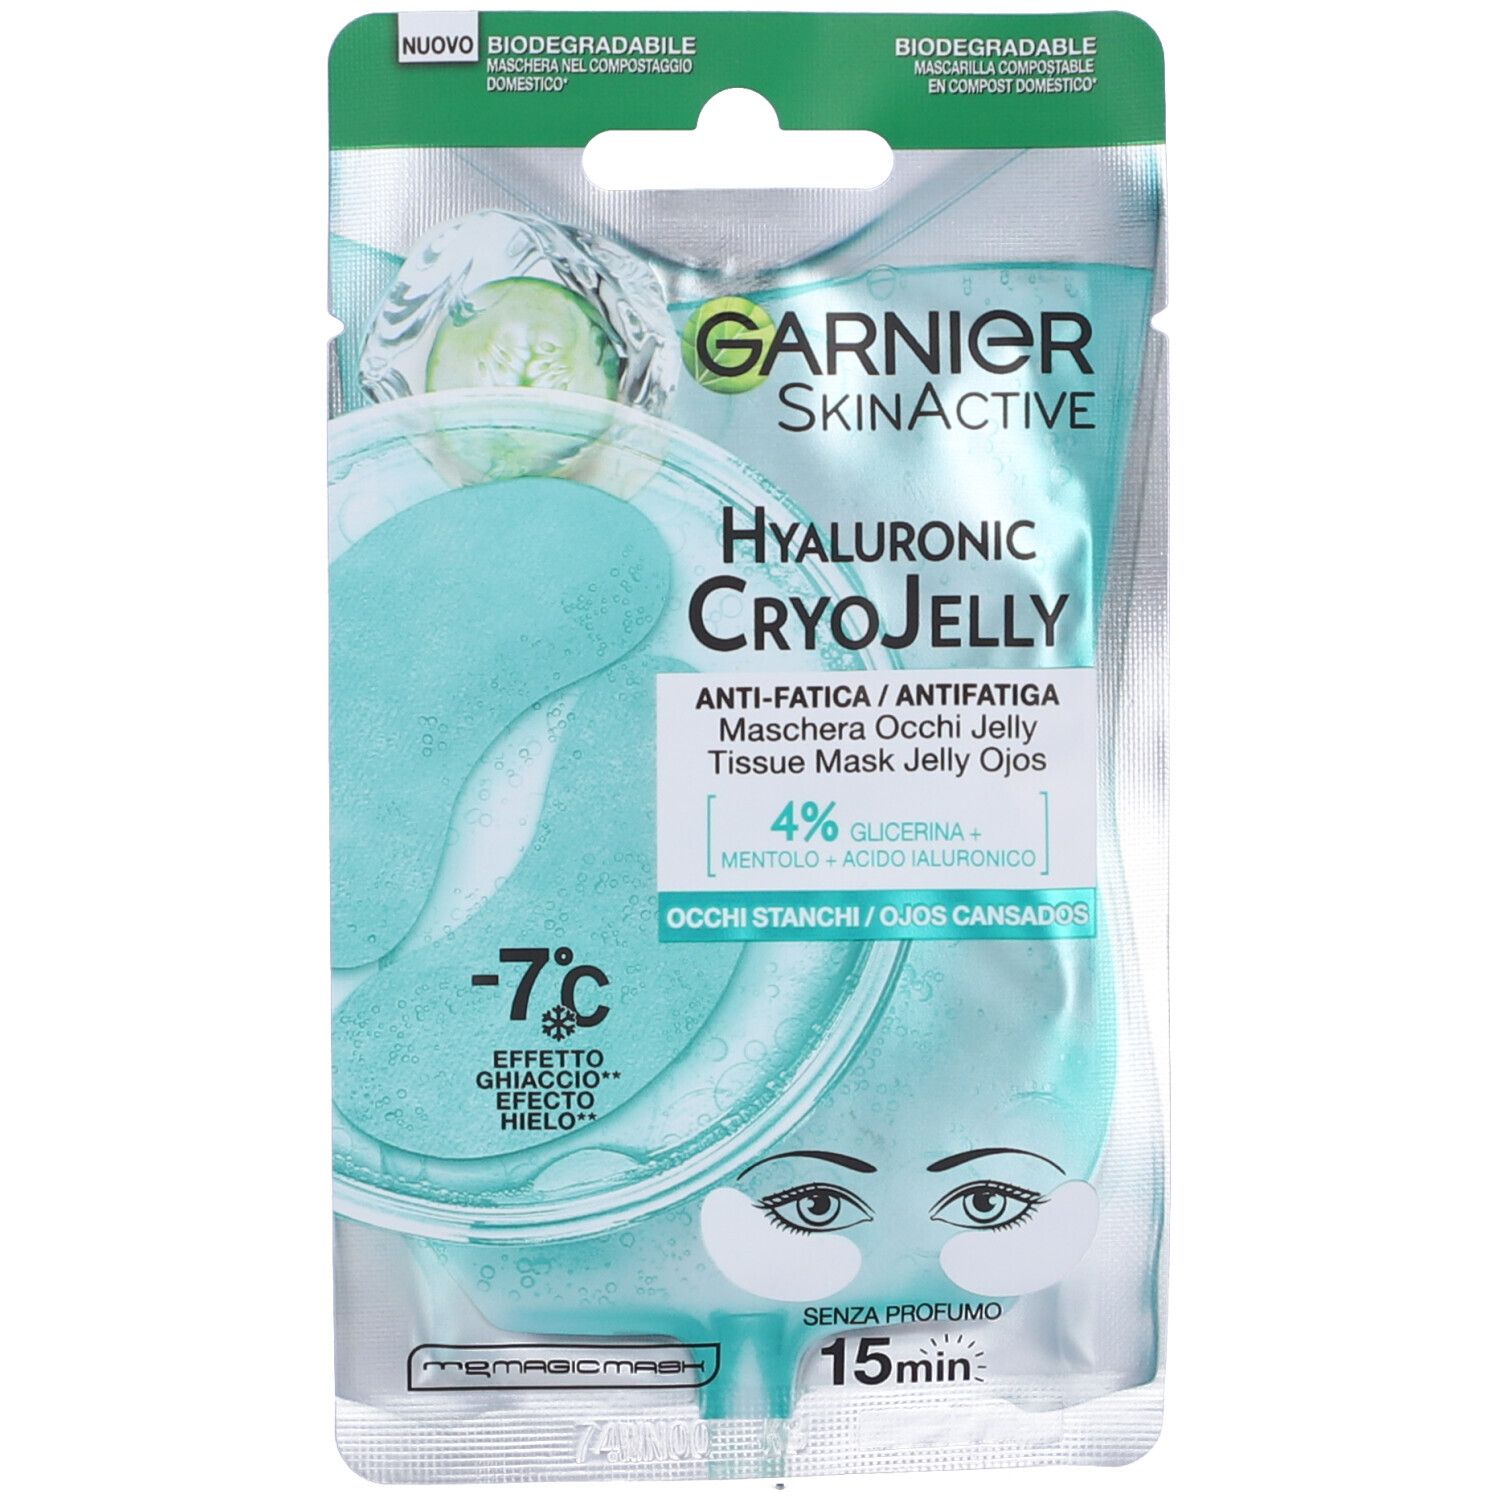 Garnier Skinactive Hyaluronic CryoJelly maschera occhi anti-fatica